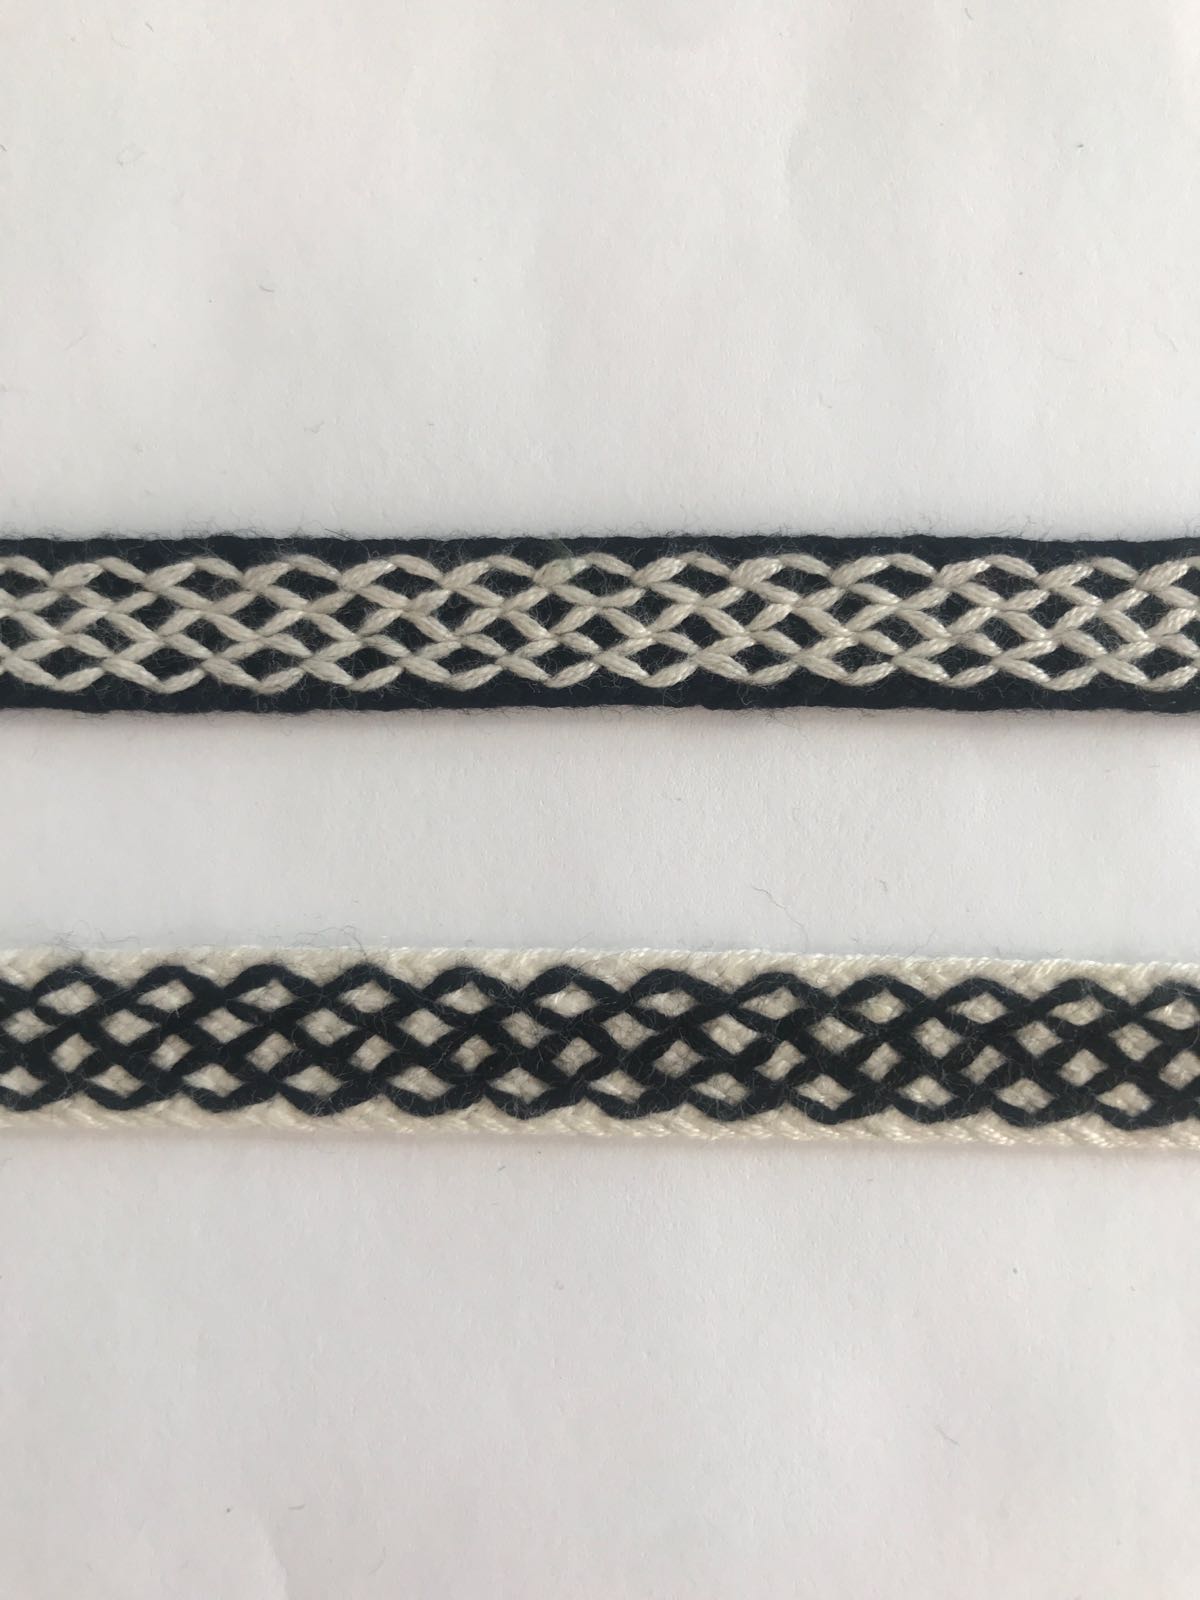 Patterned knitting ribbon 14 mm